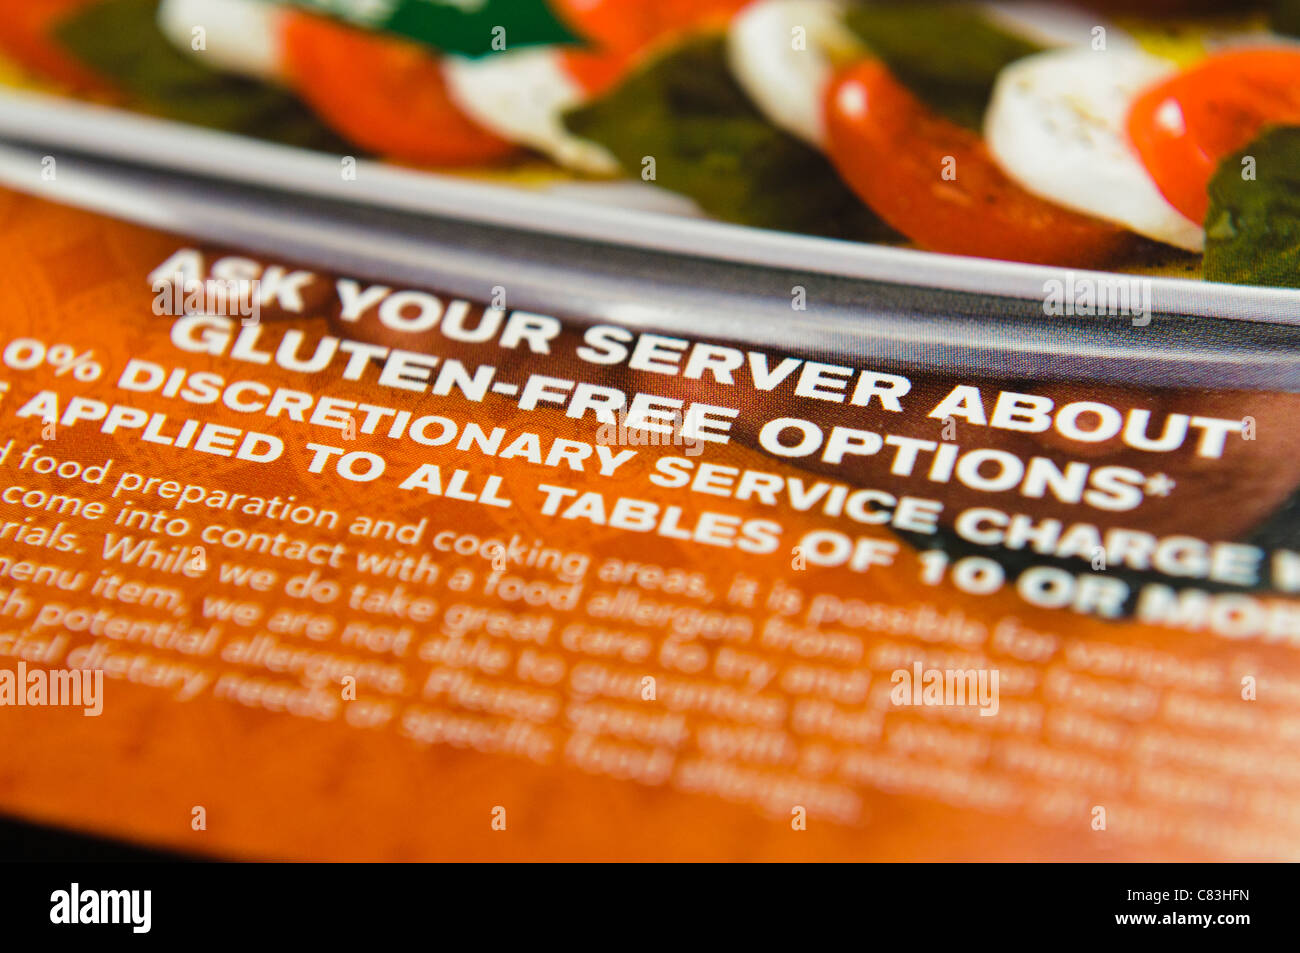 Gluten Free option on a restaurant menu Stock Photo